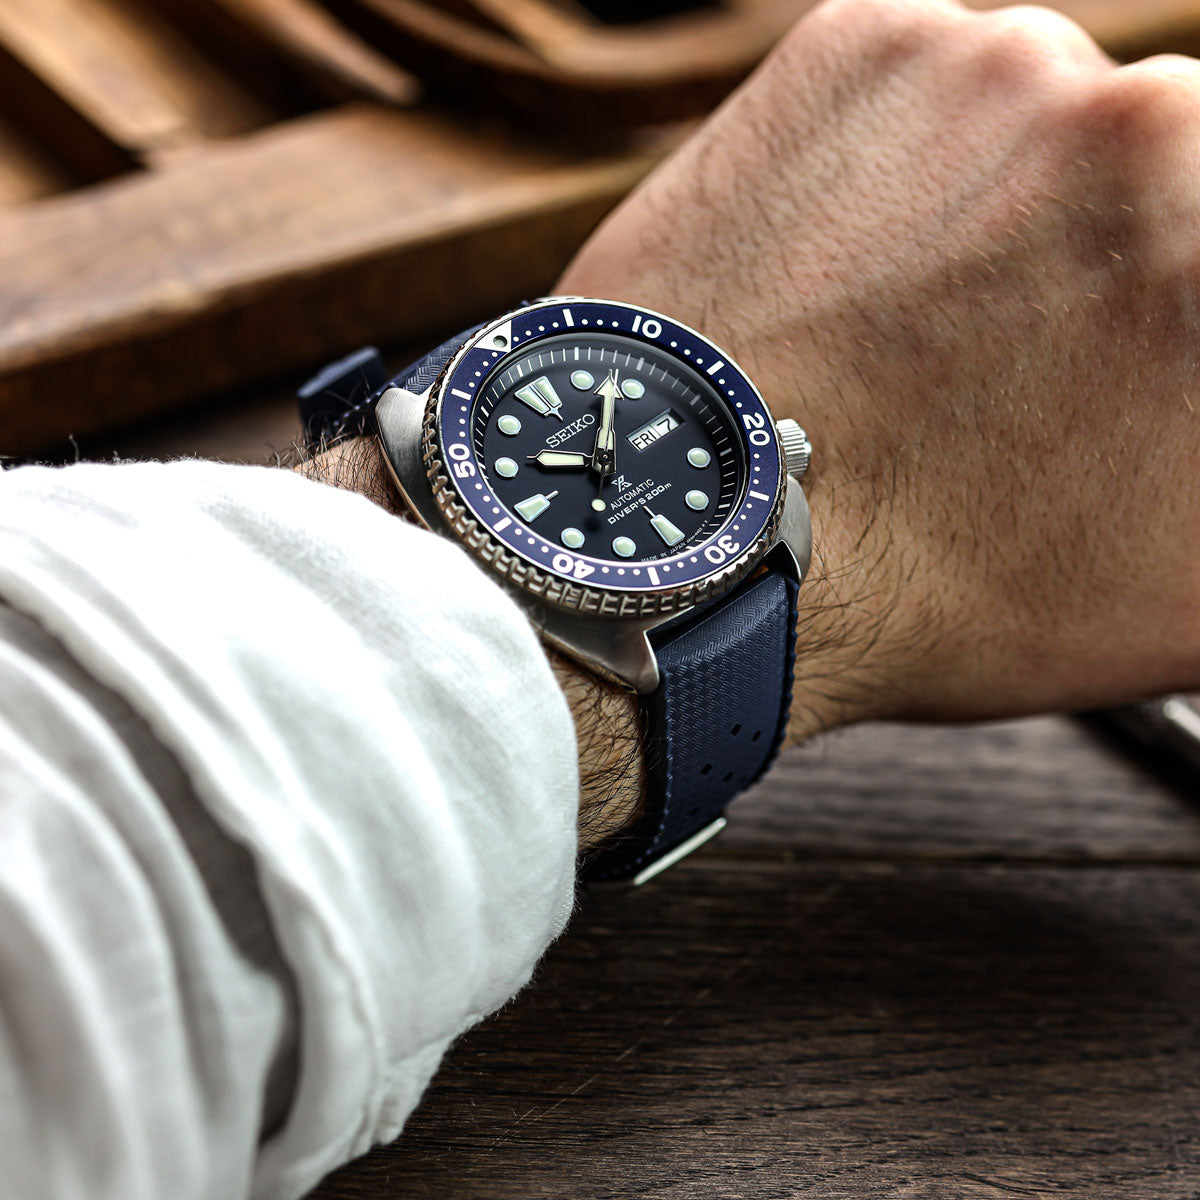 Original TROPIC® Dive Watch Strap - Navy Blue - additional image 1